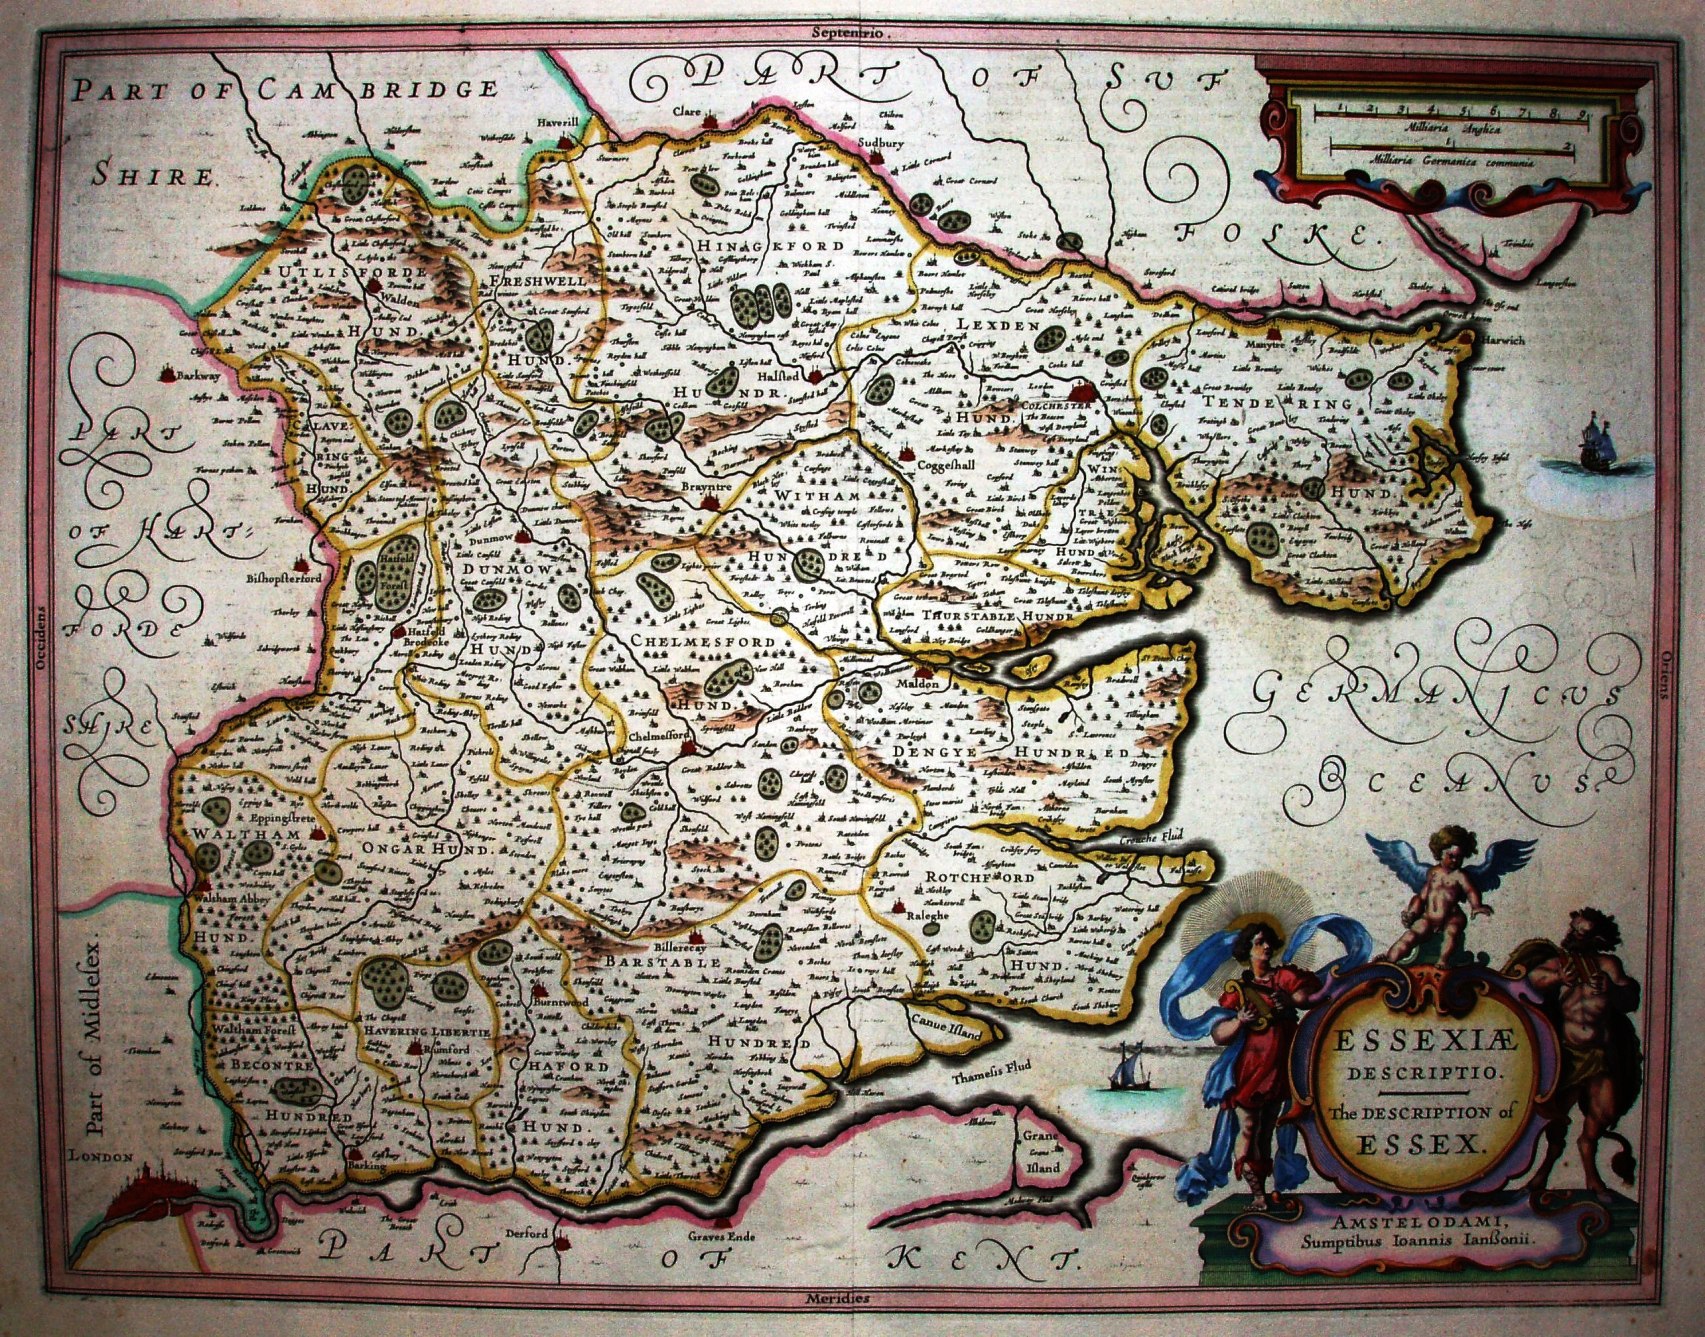 Essex ready for Atlas Novus, by Jansson, 1636